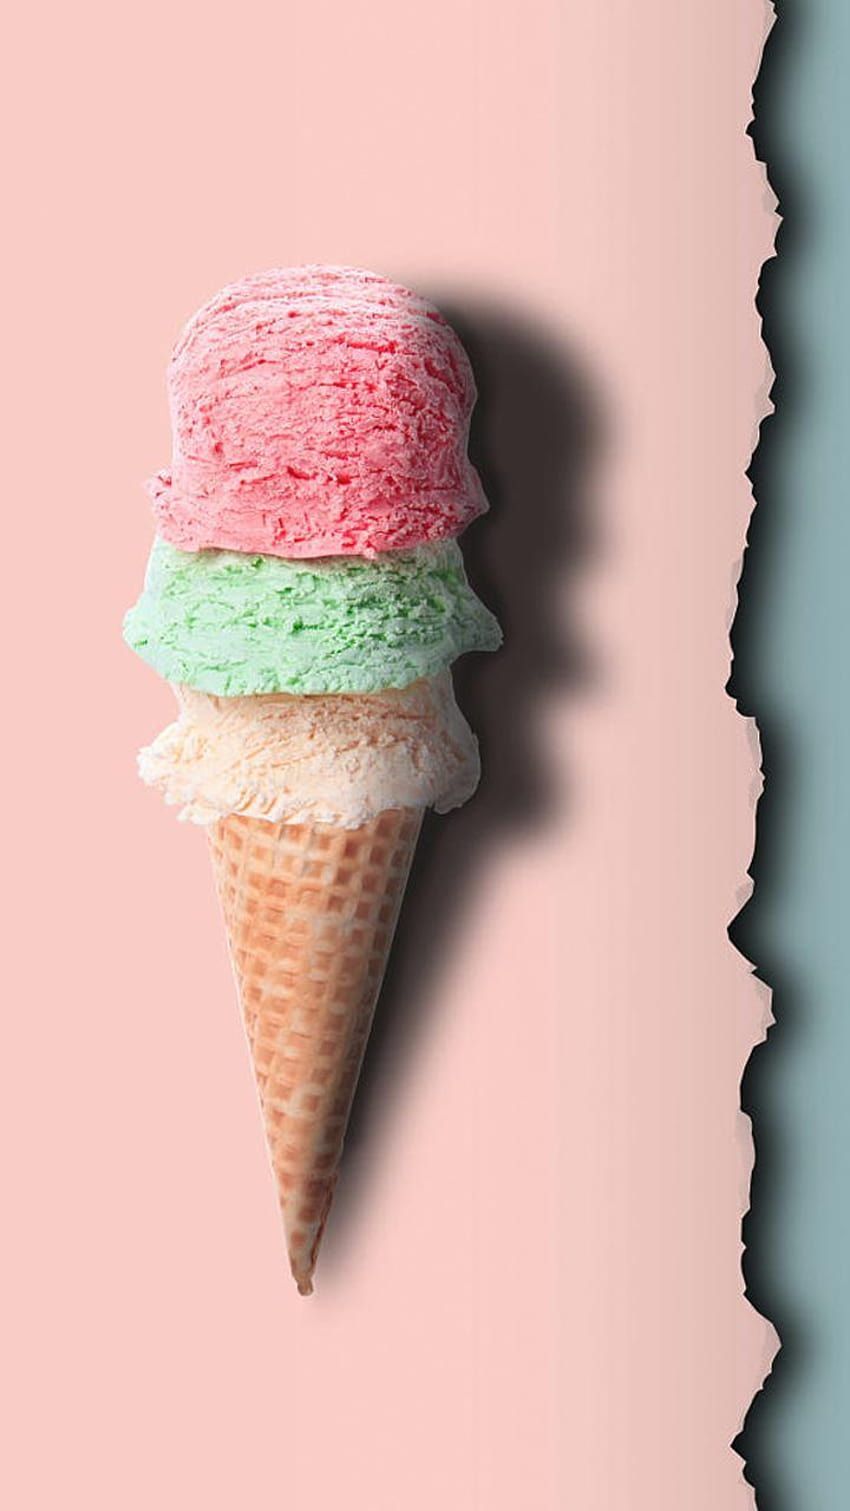 A pink, green and white ice cream cone - Ice cream